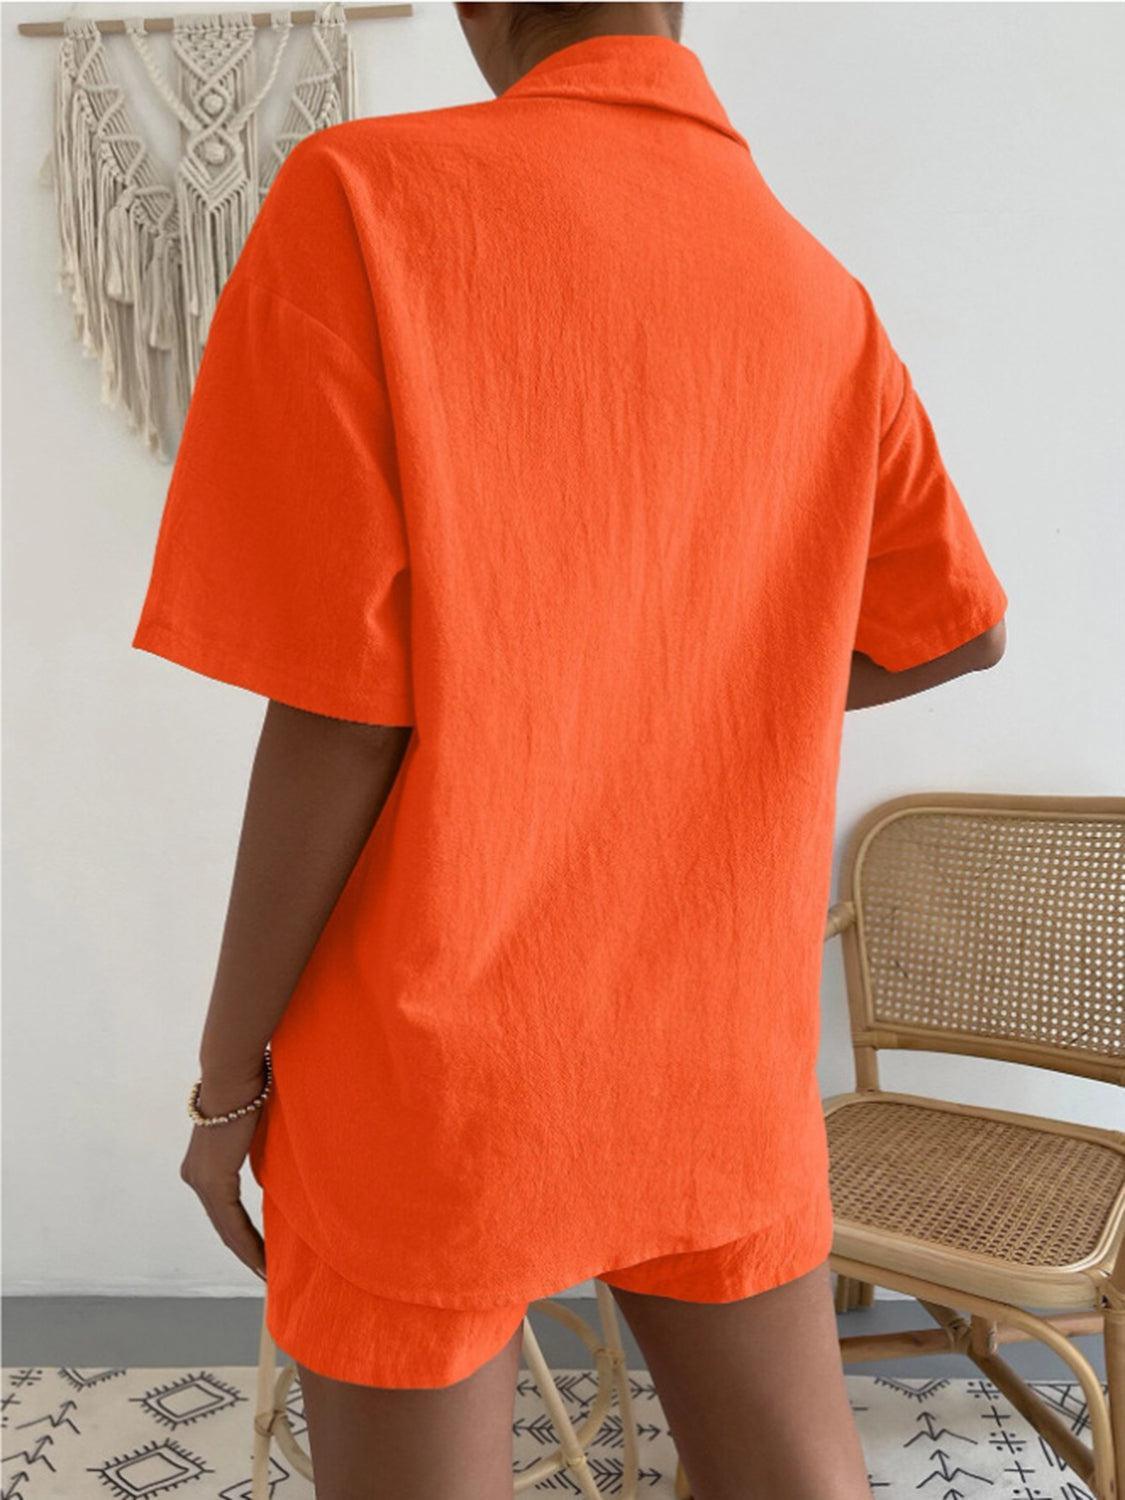 a woman wearing an orange shirt and shorts